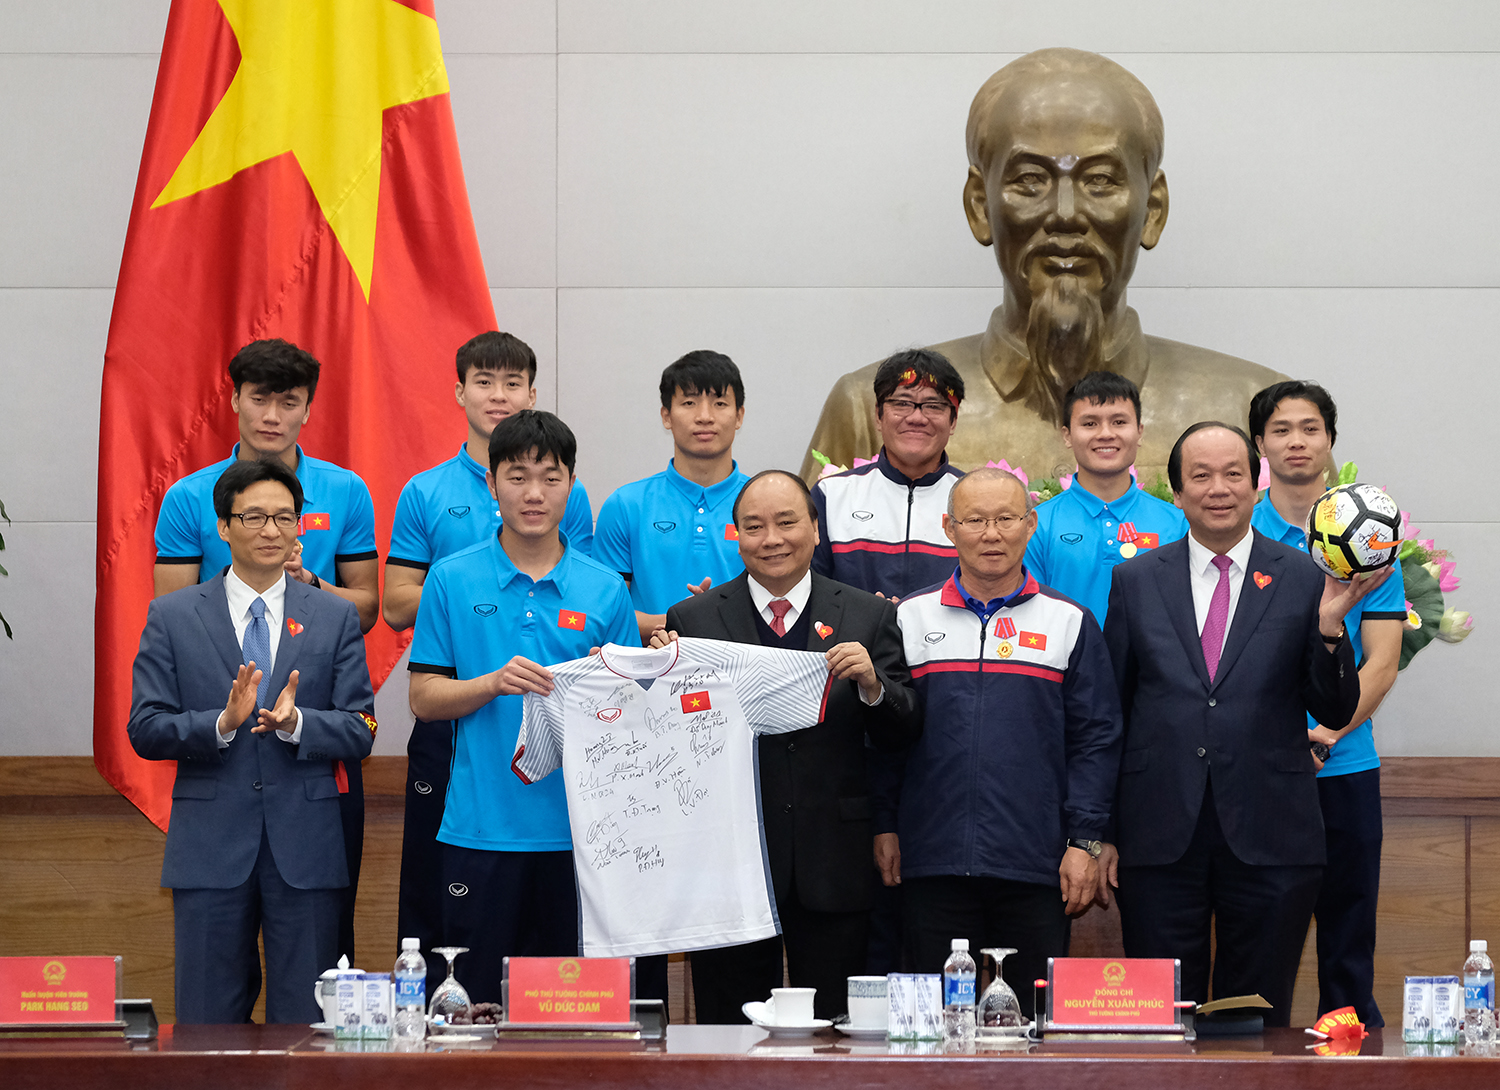 Honourable medals awarded to U23 Vietnam team